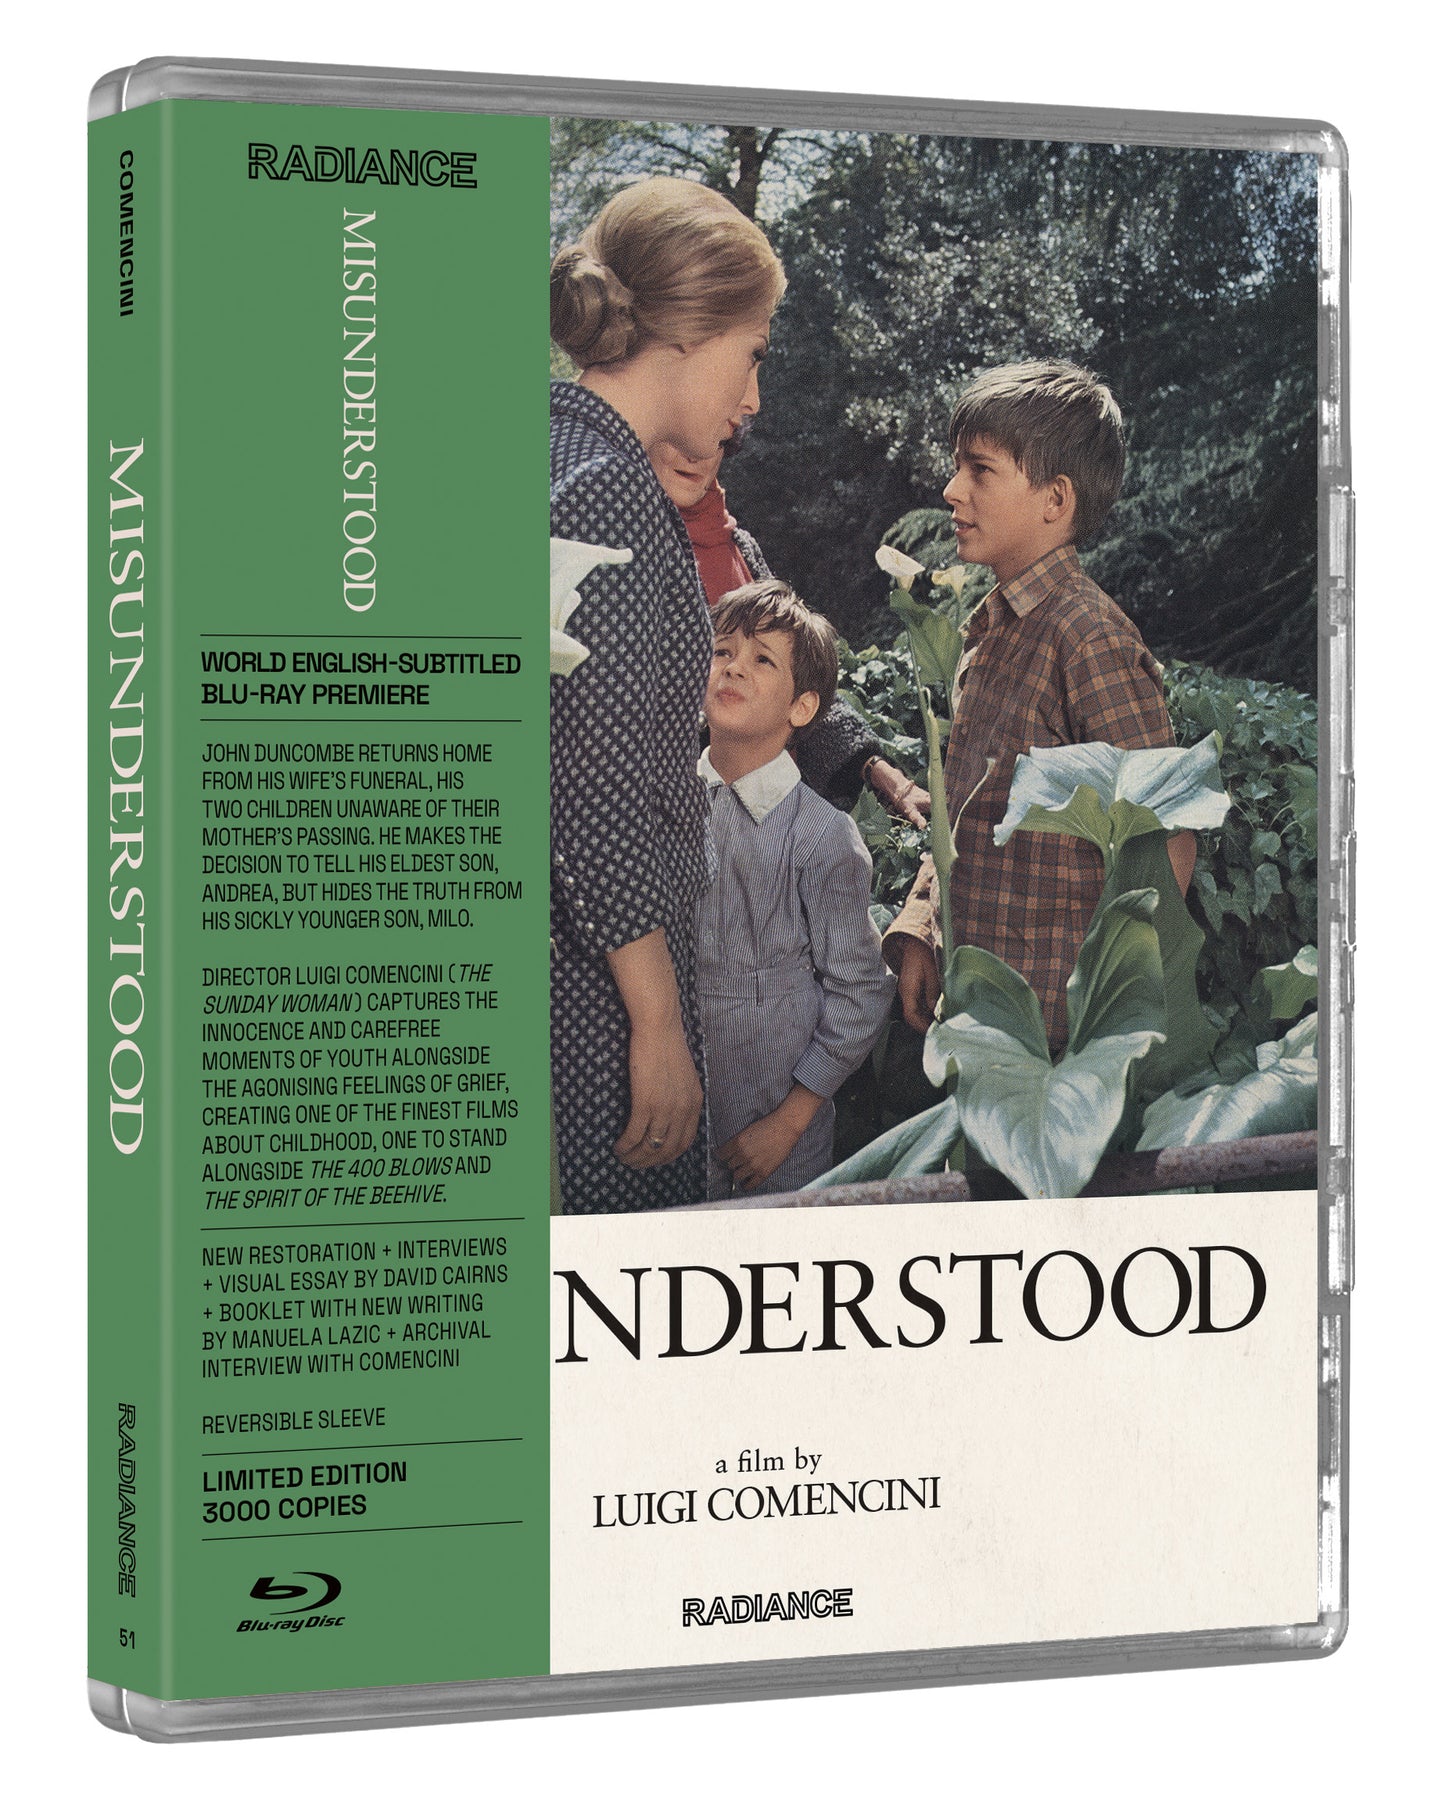 Misunderstood Blu-ray Limited Edition (Radiance U.S.) [Preorder]